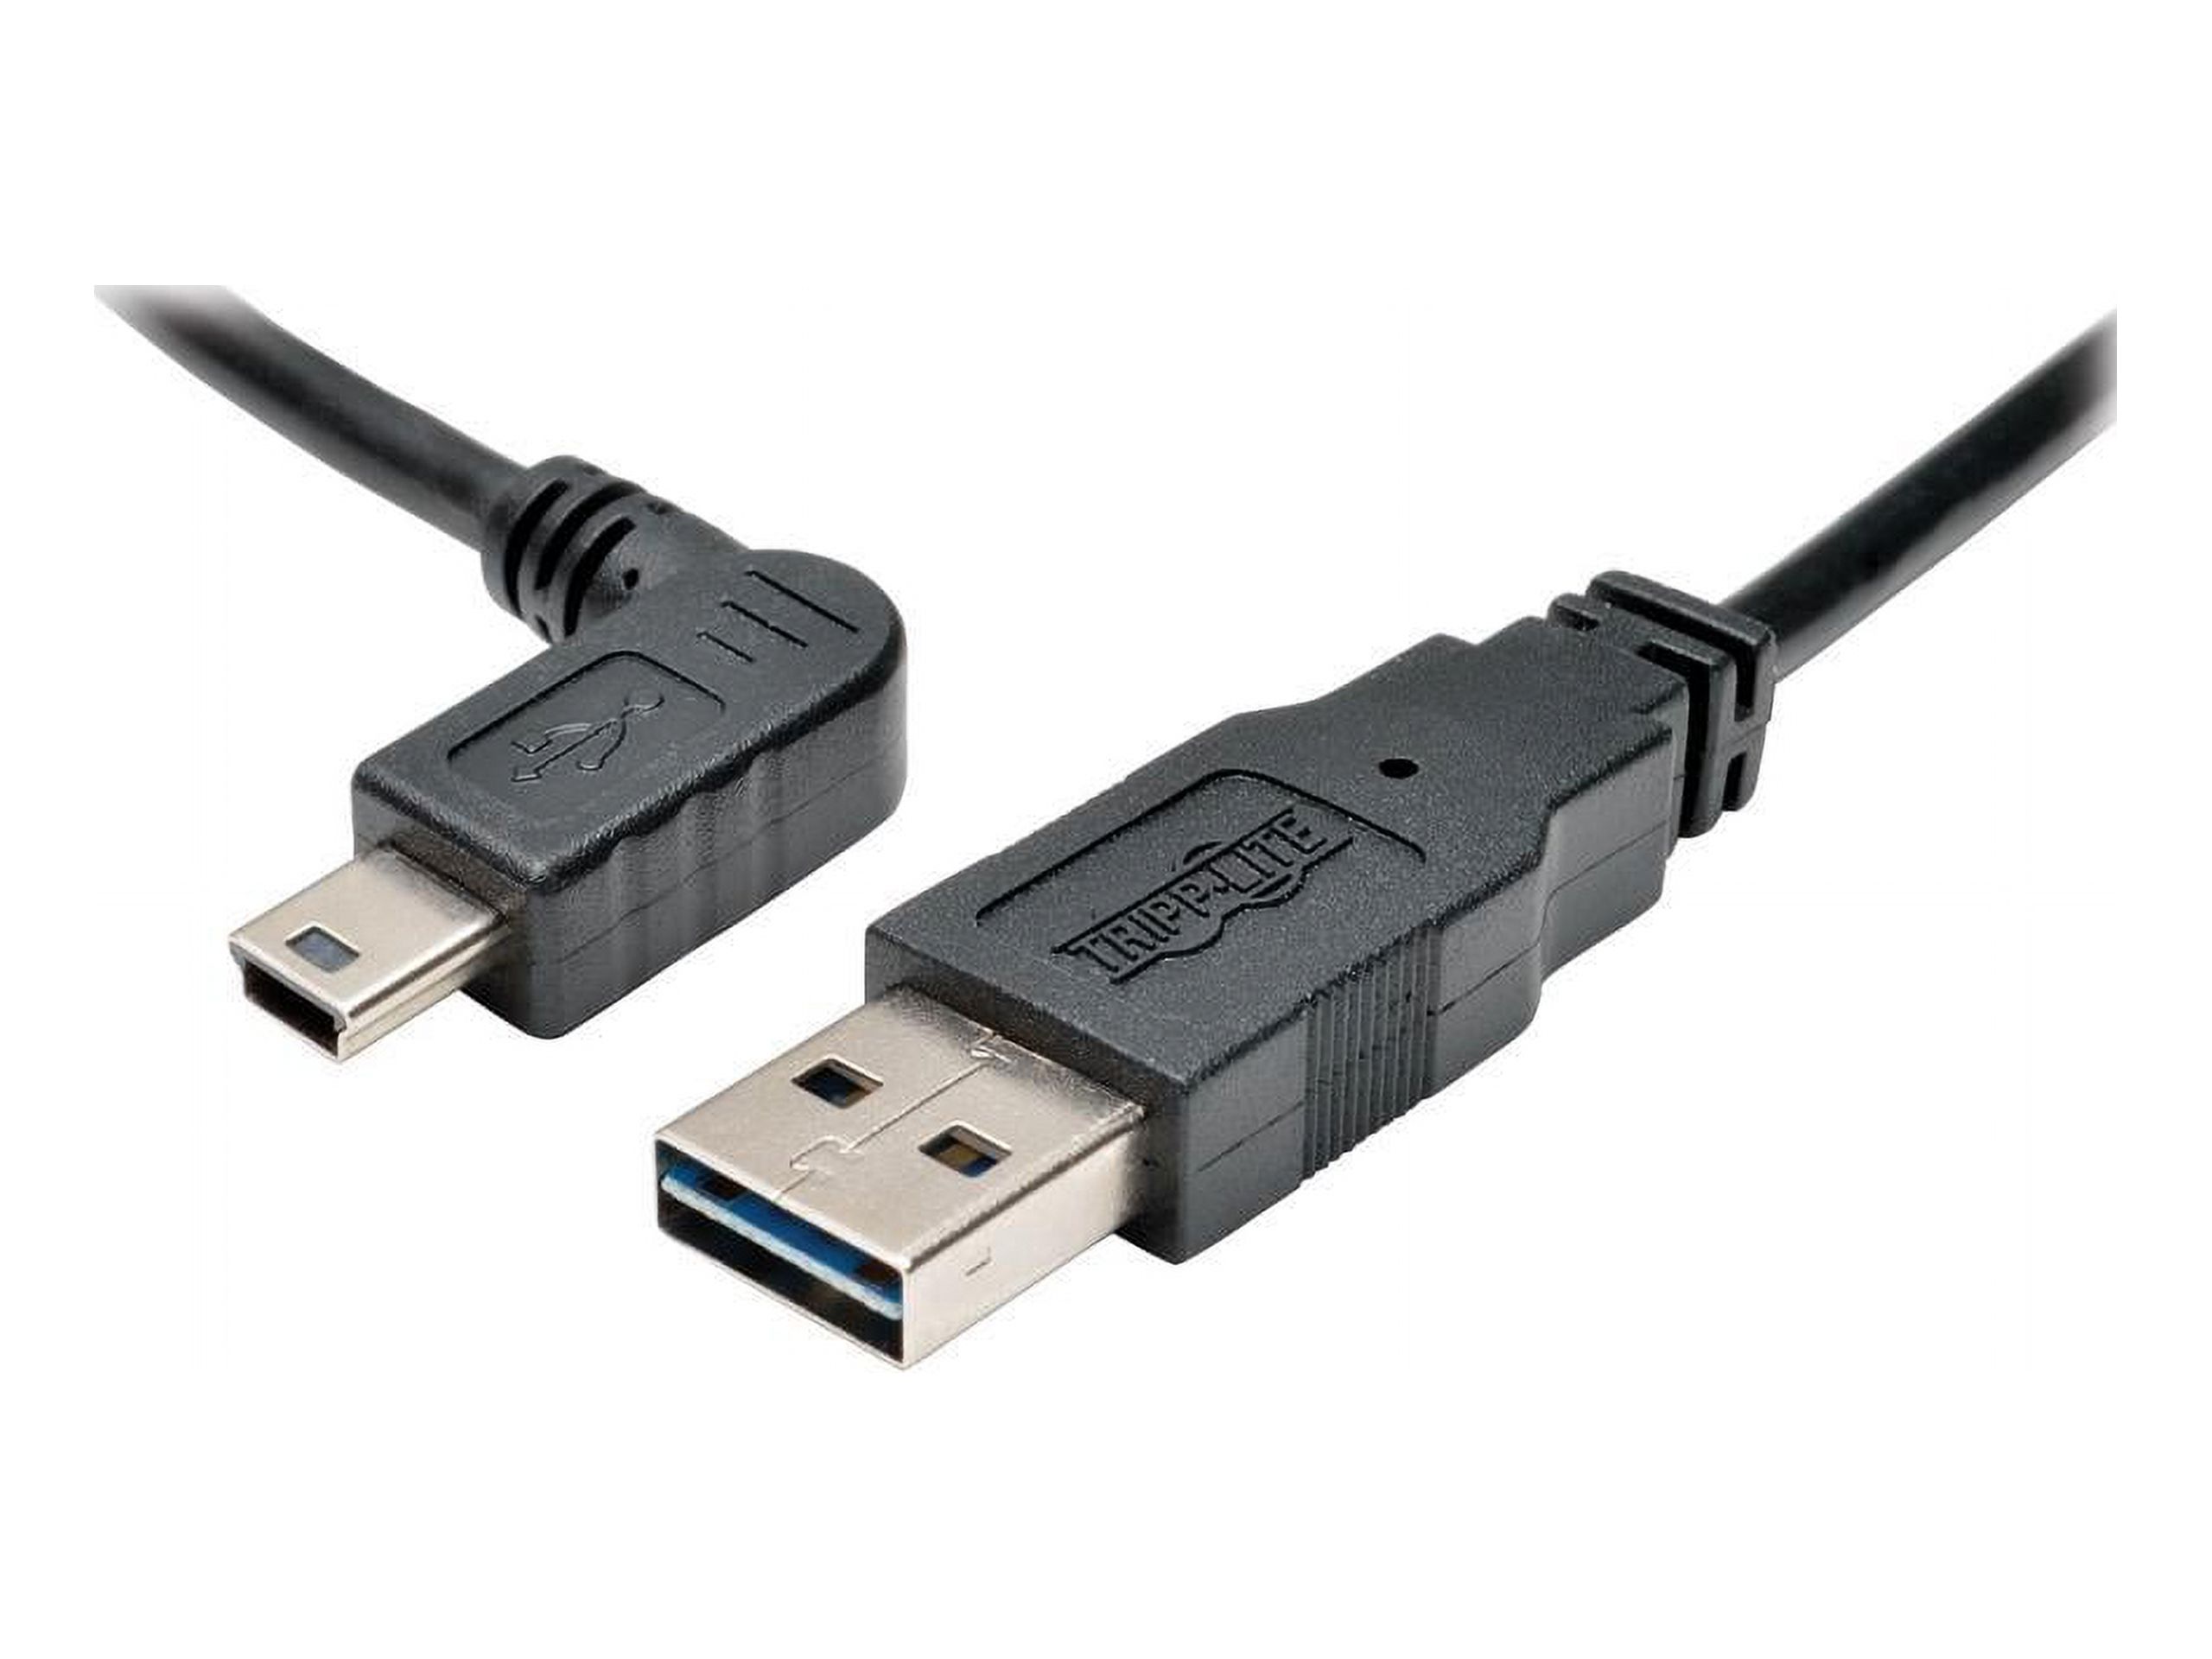 Tripp Lite UR030-006-LAB USB Data Transfer Cable - image 1 of 2